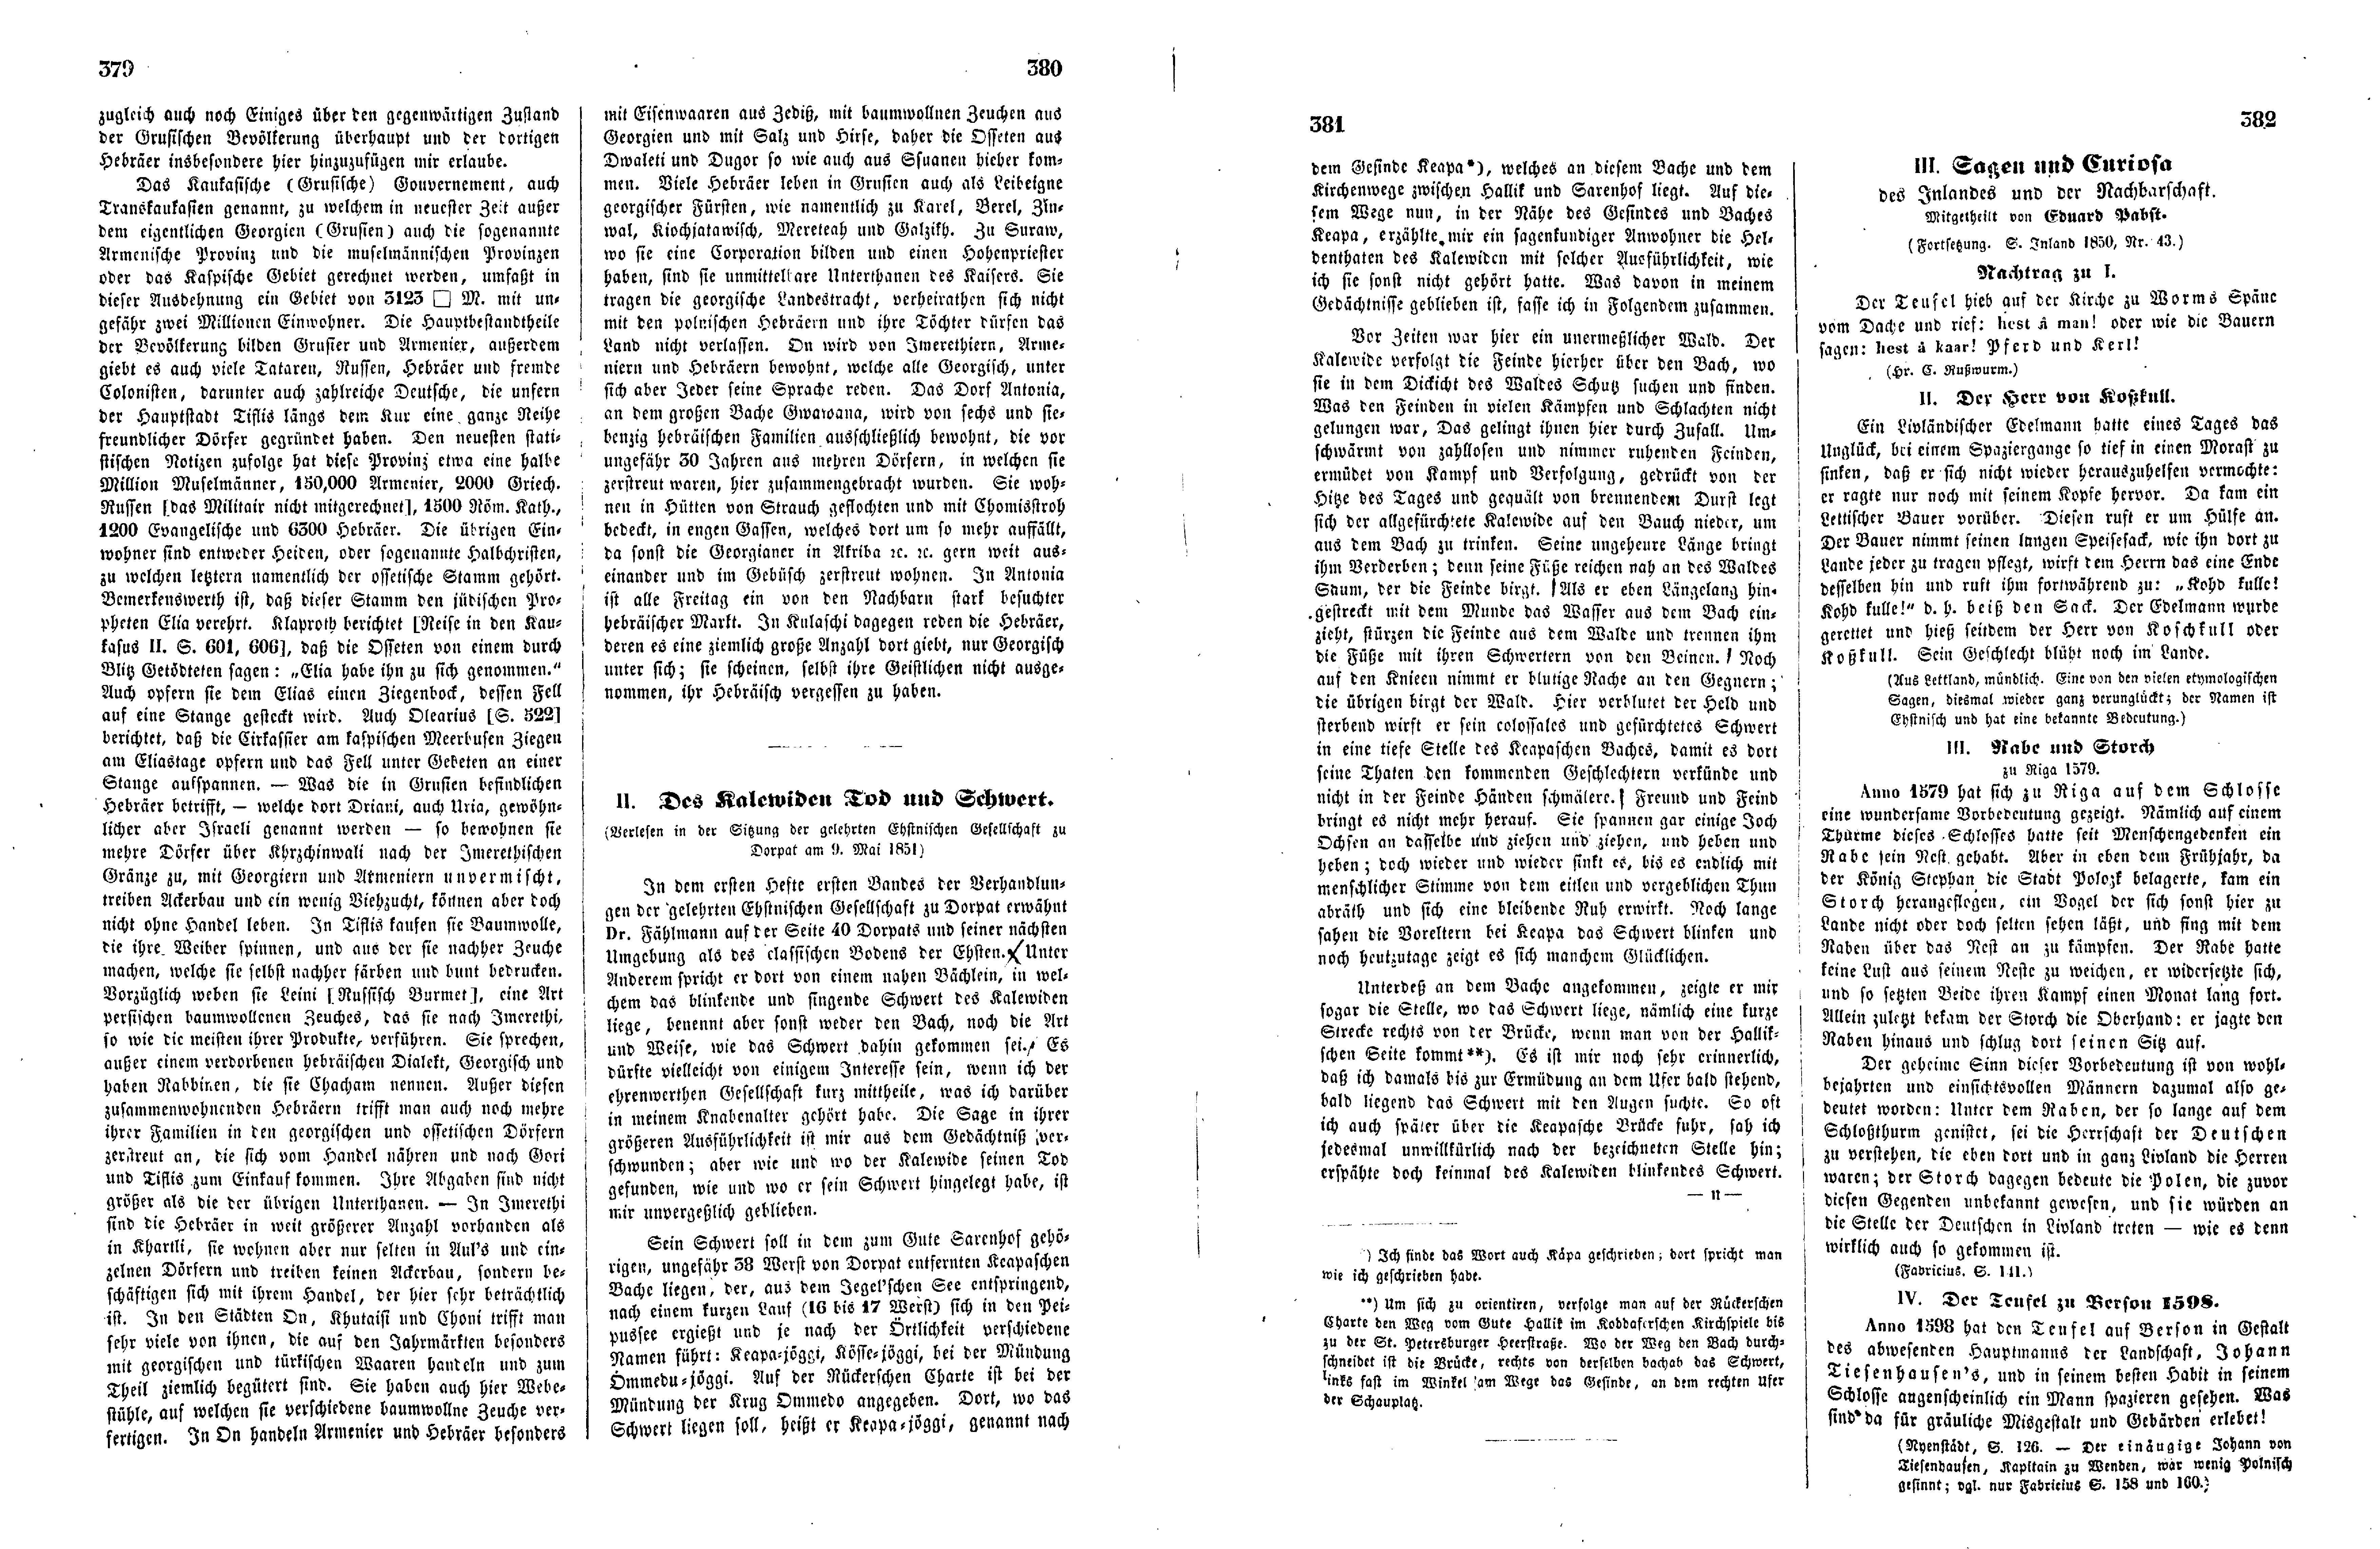 Das Inland [16] (1851) | 99. (379-382) Main body of text